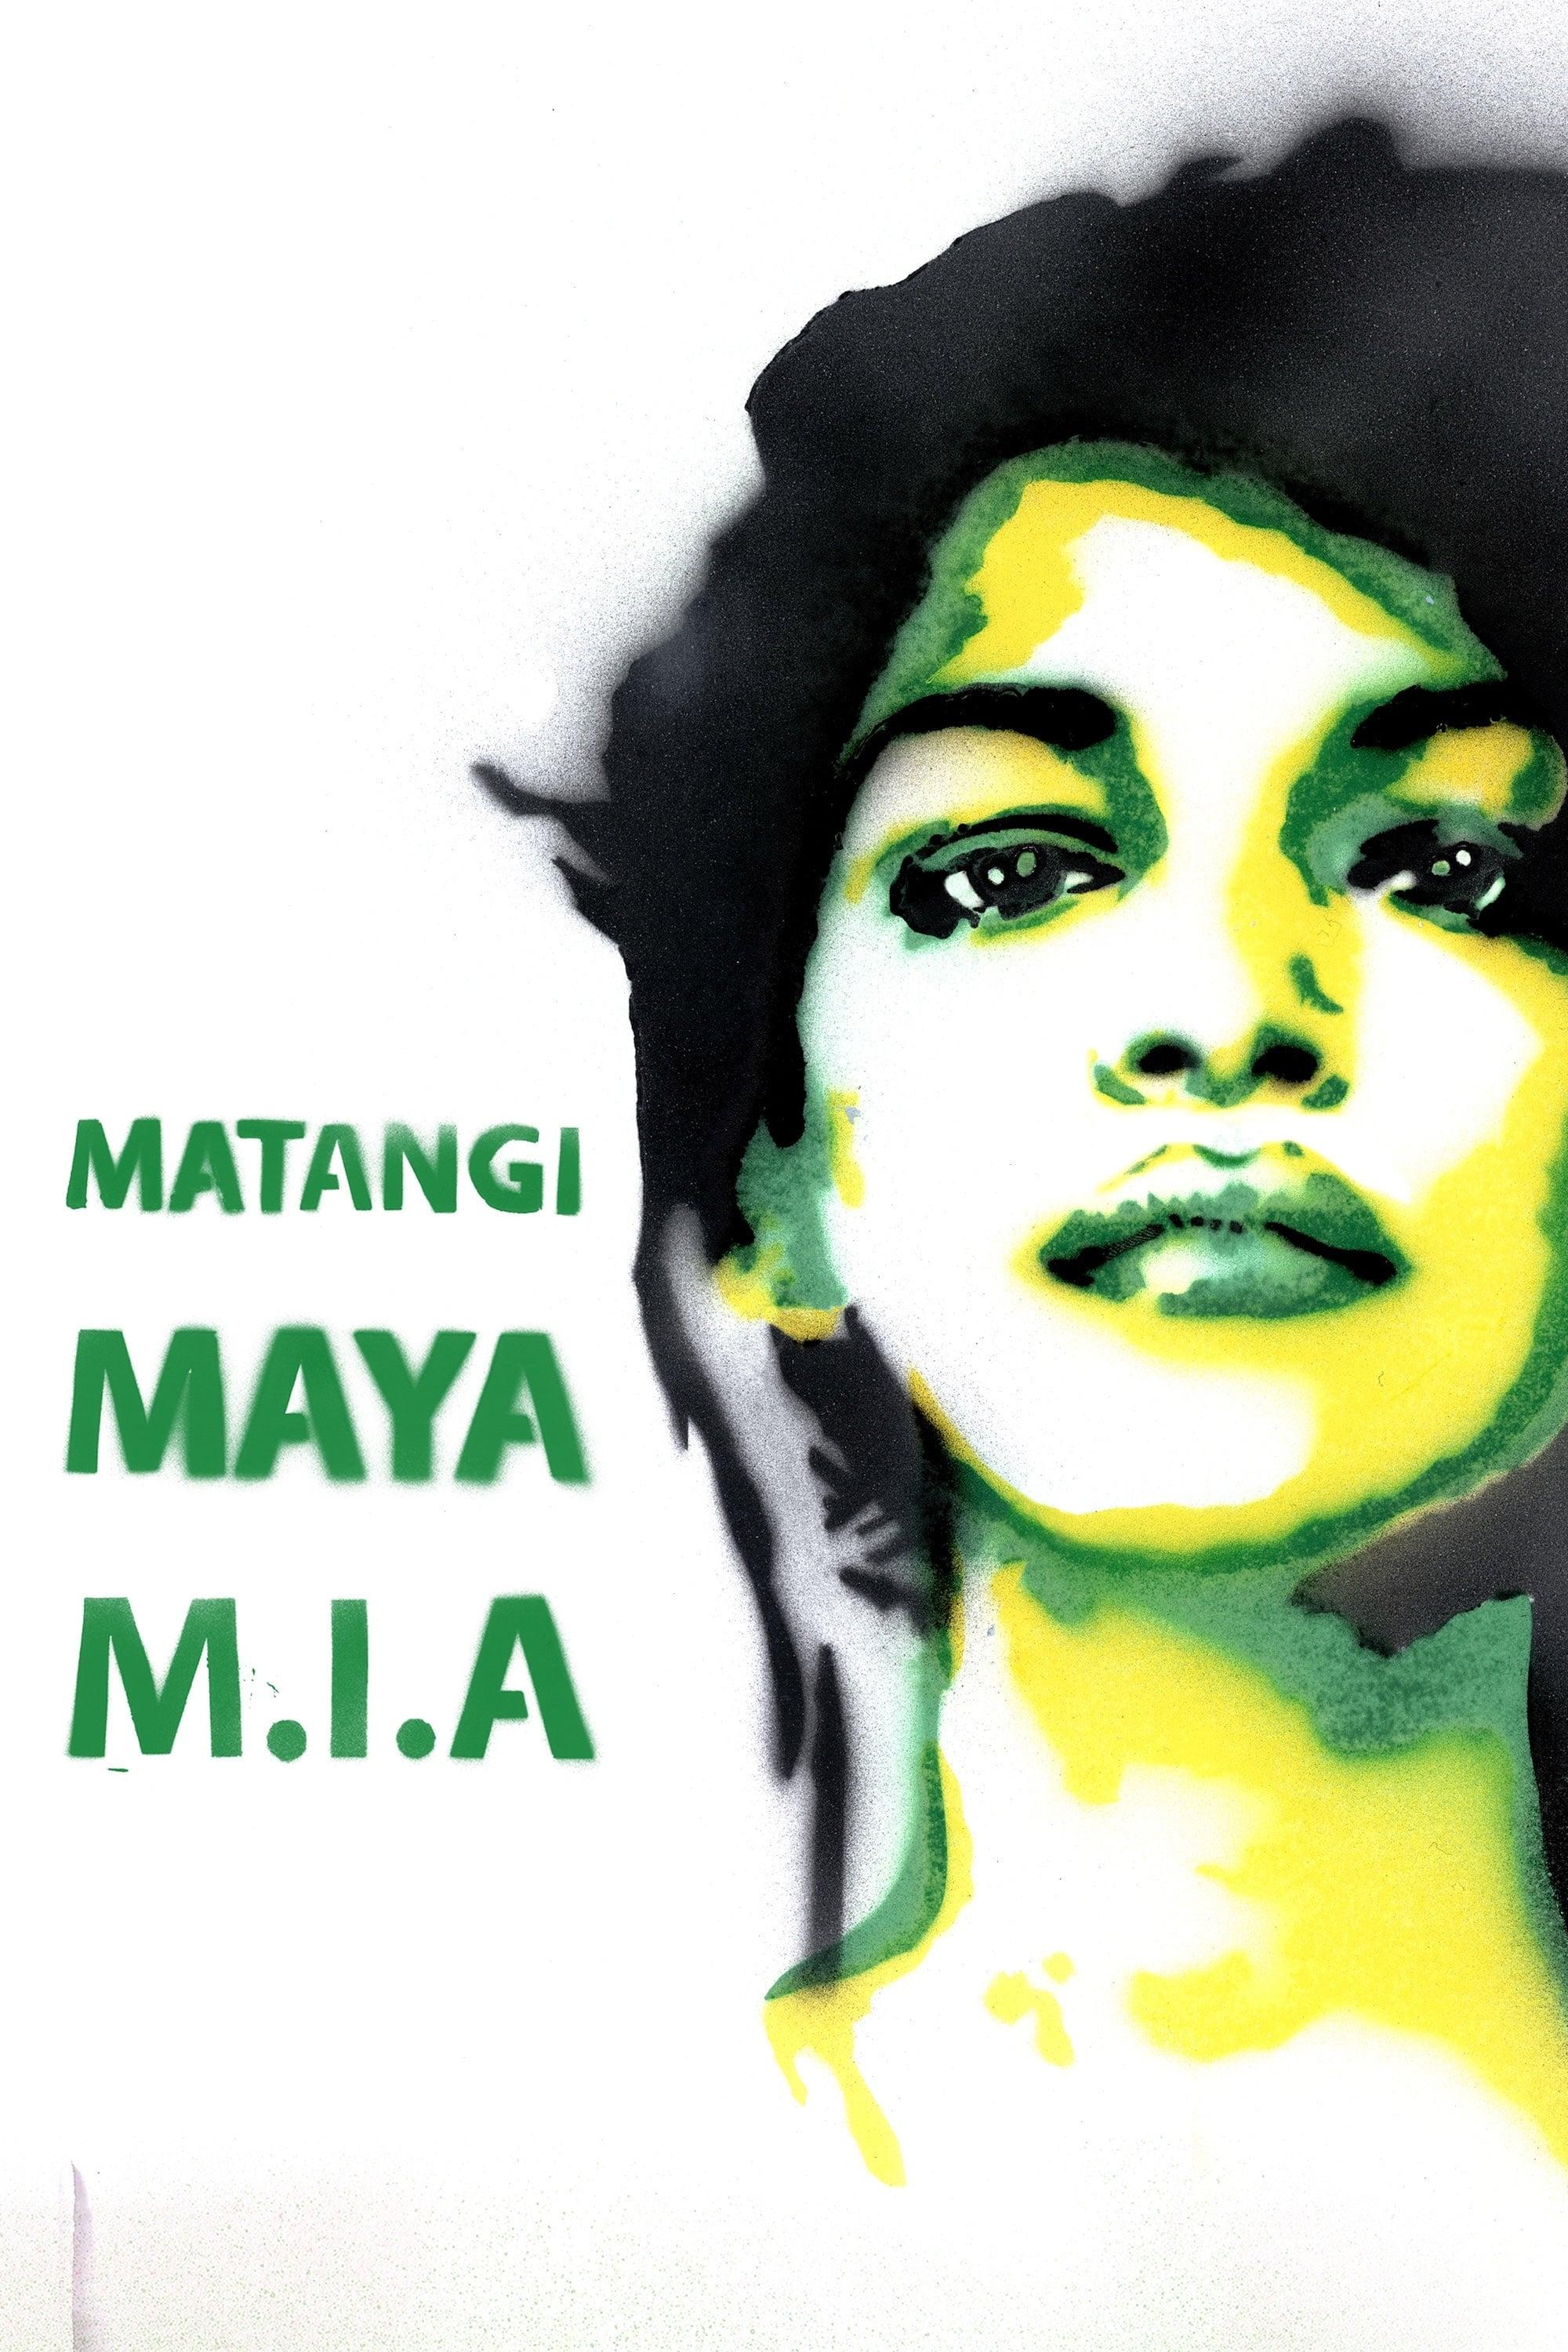 Matangi / Maya / M.I.A. poster